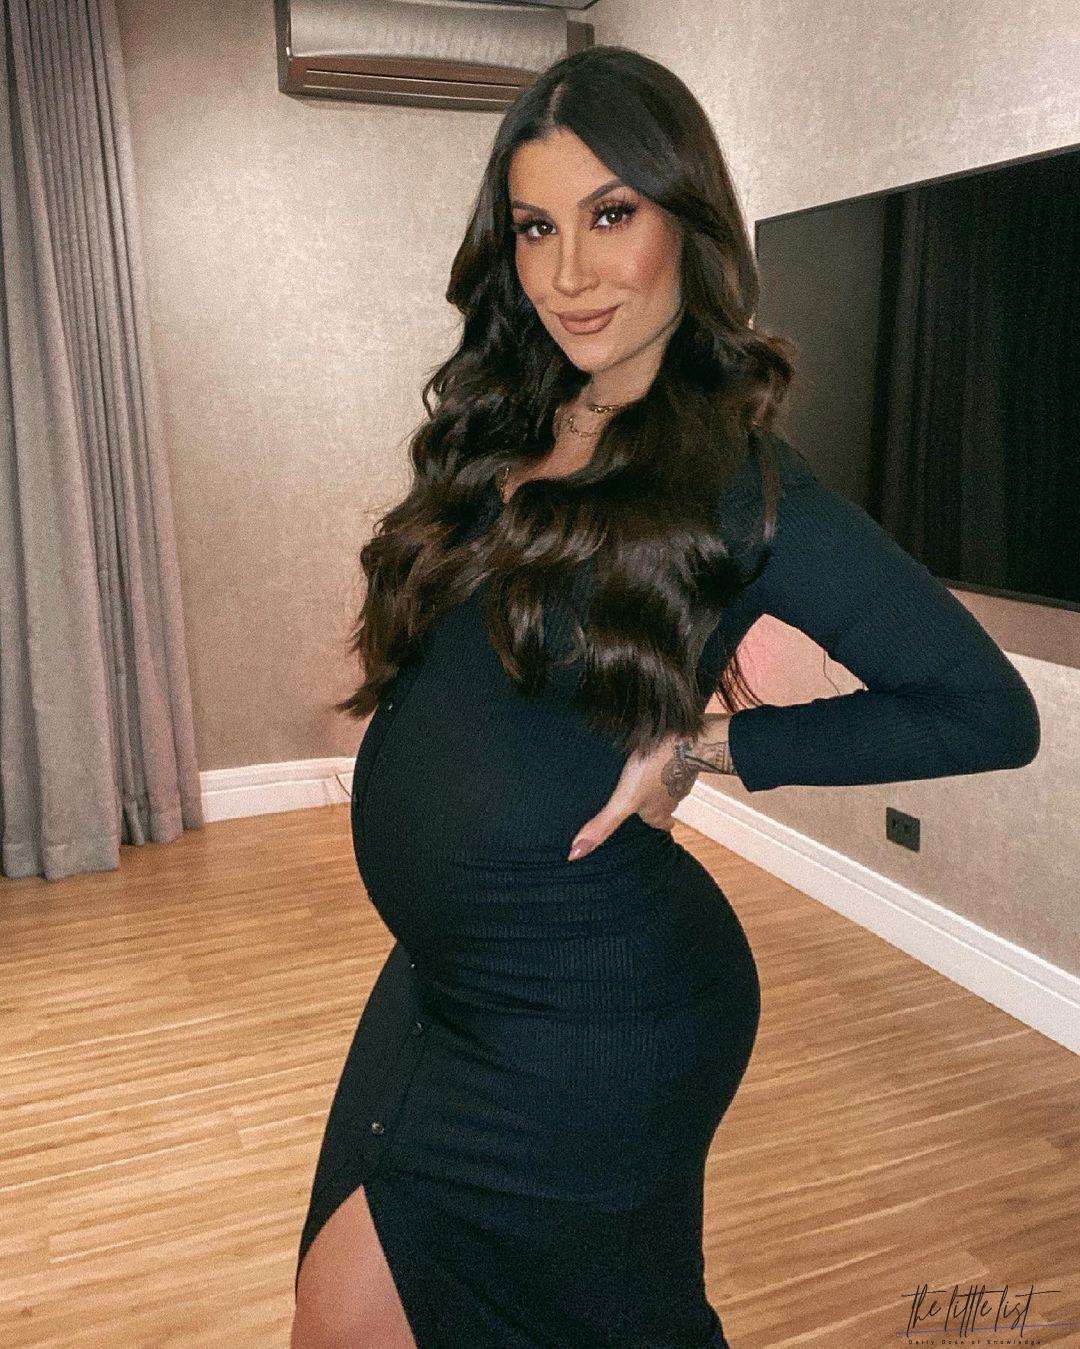 caption for pregnant photo on Instagram